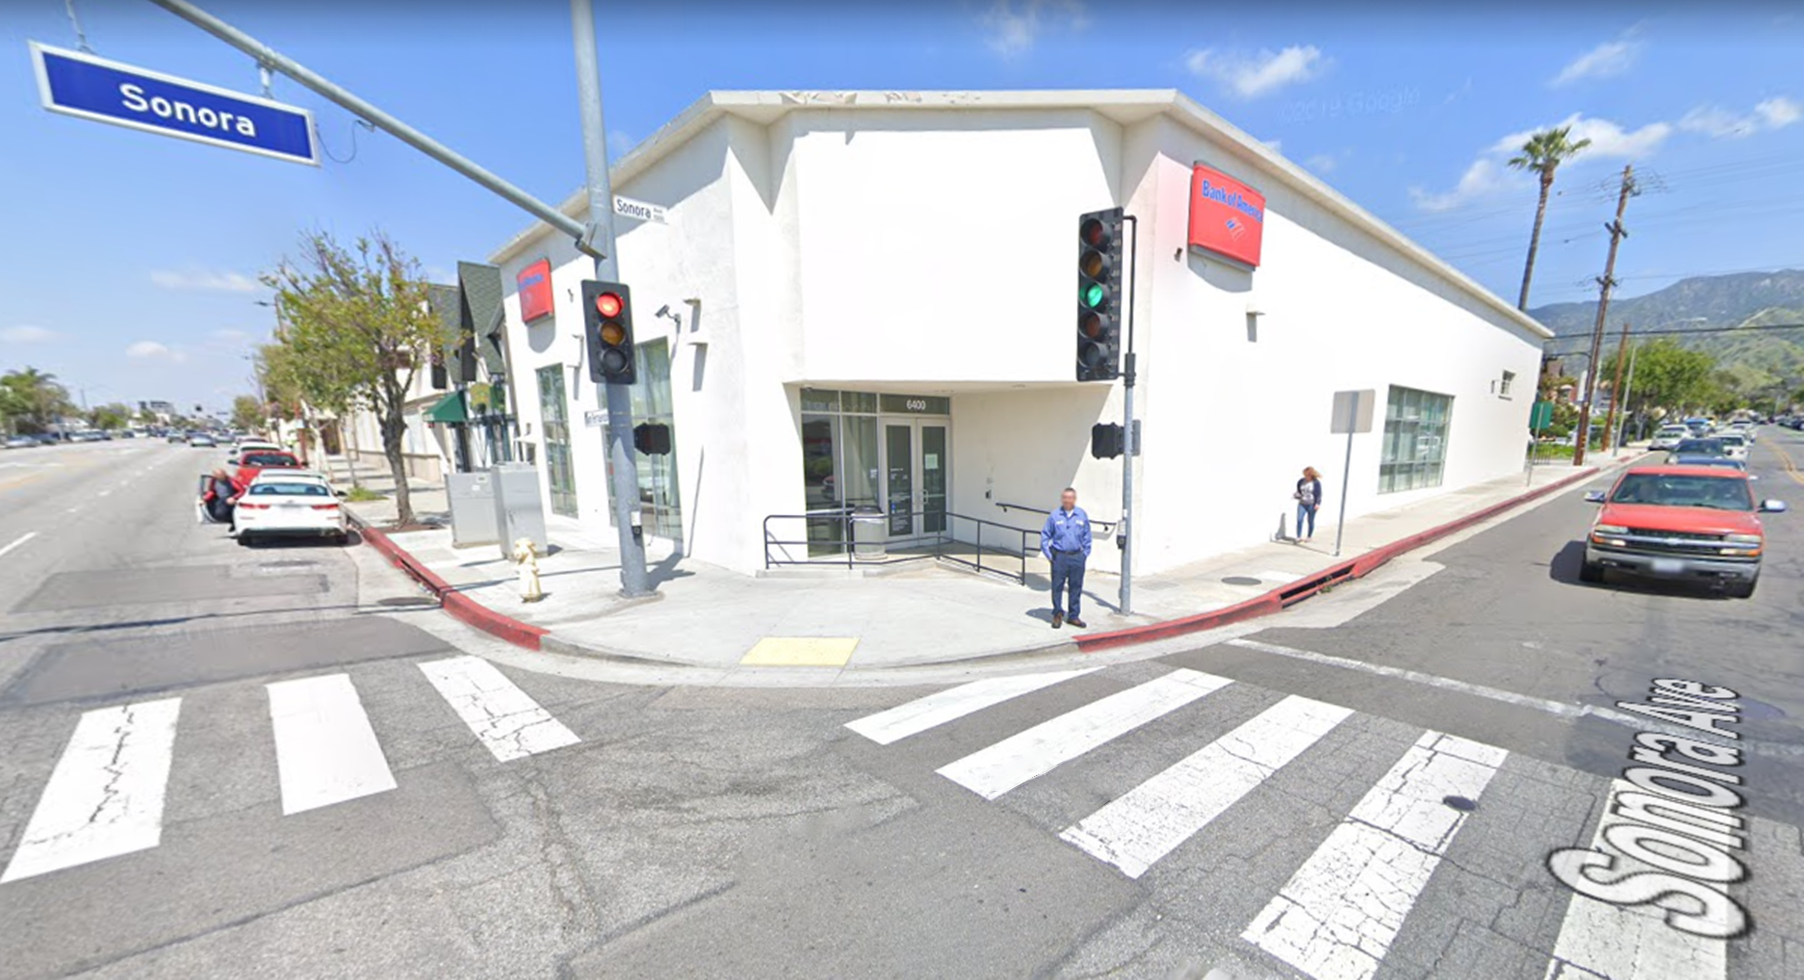 Bank of America financial center with walk-up ATM | 6400 San Fernando Rd, Glendale, CA 91201